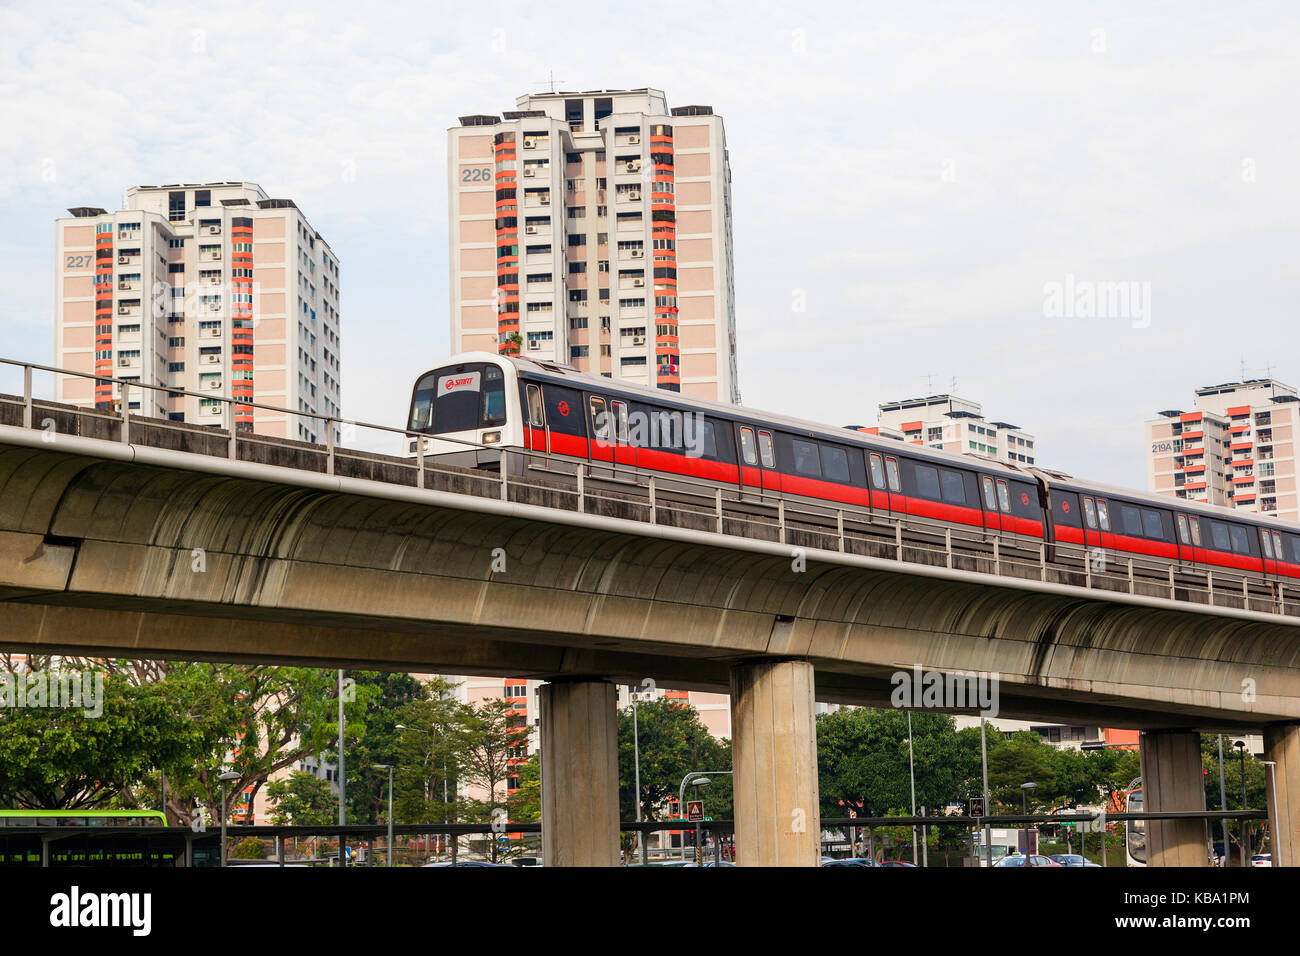 Singapur - Septiembre 11, 2017: Singapur smrt (Mass Rapid Transit) metro viaja sobre los rieles elevados, a través de un barrio de viviendas públicas el smrt. Foto de stock